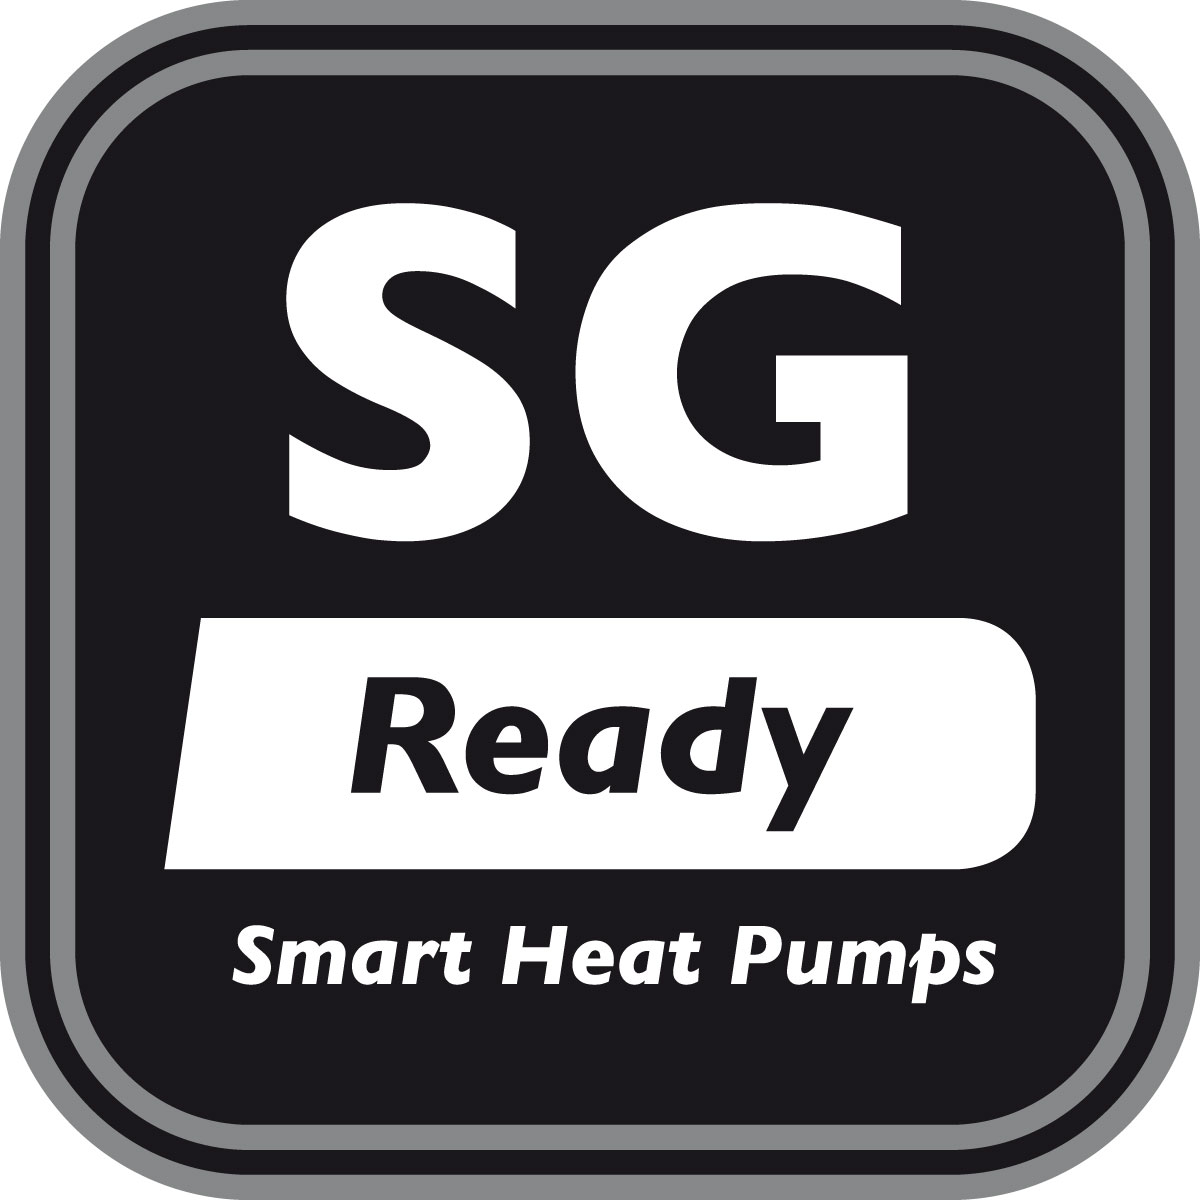 SG Ready Smart Heat Pump